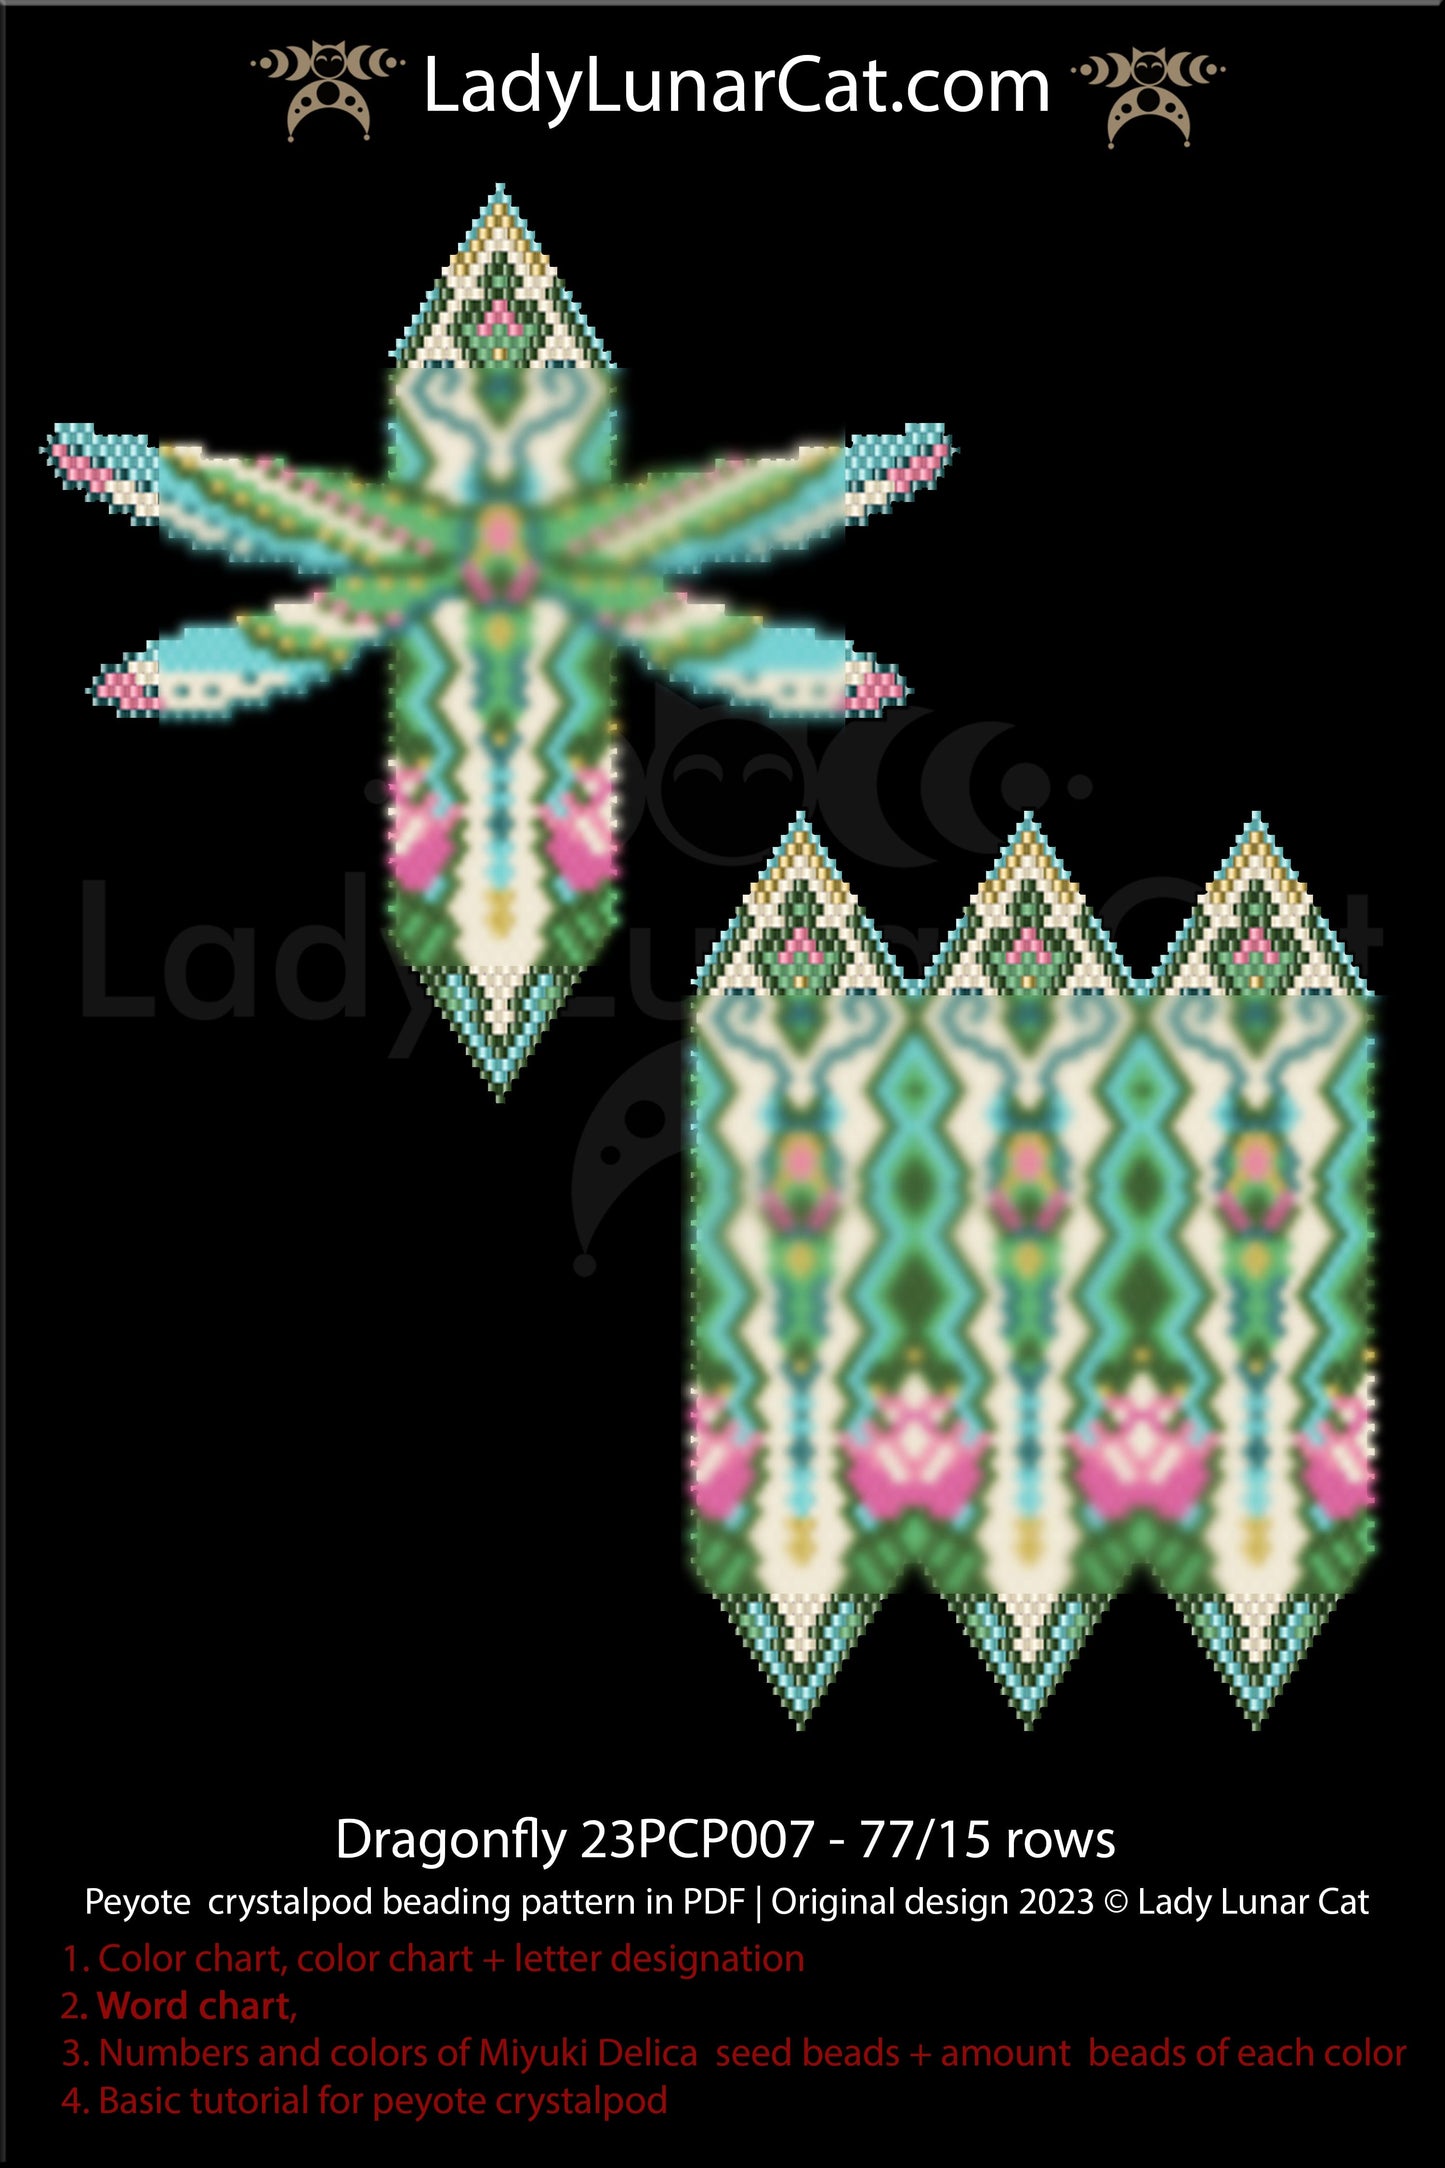 Copy of Peyote 3drop pod pattern or crystalpod pattern for beading Easter 23PCP006 LadyLunarCat